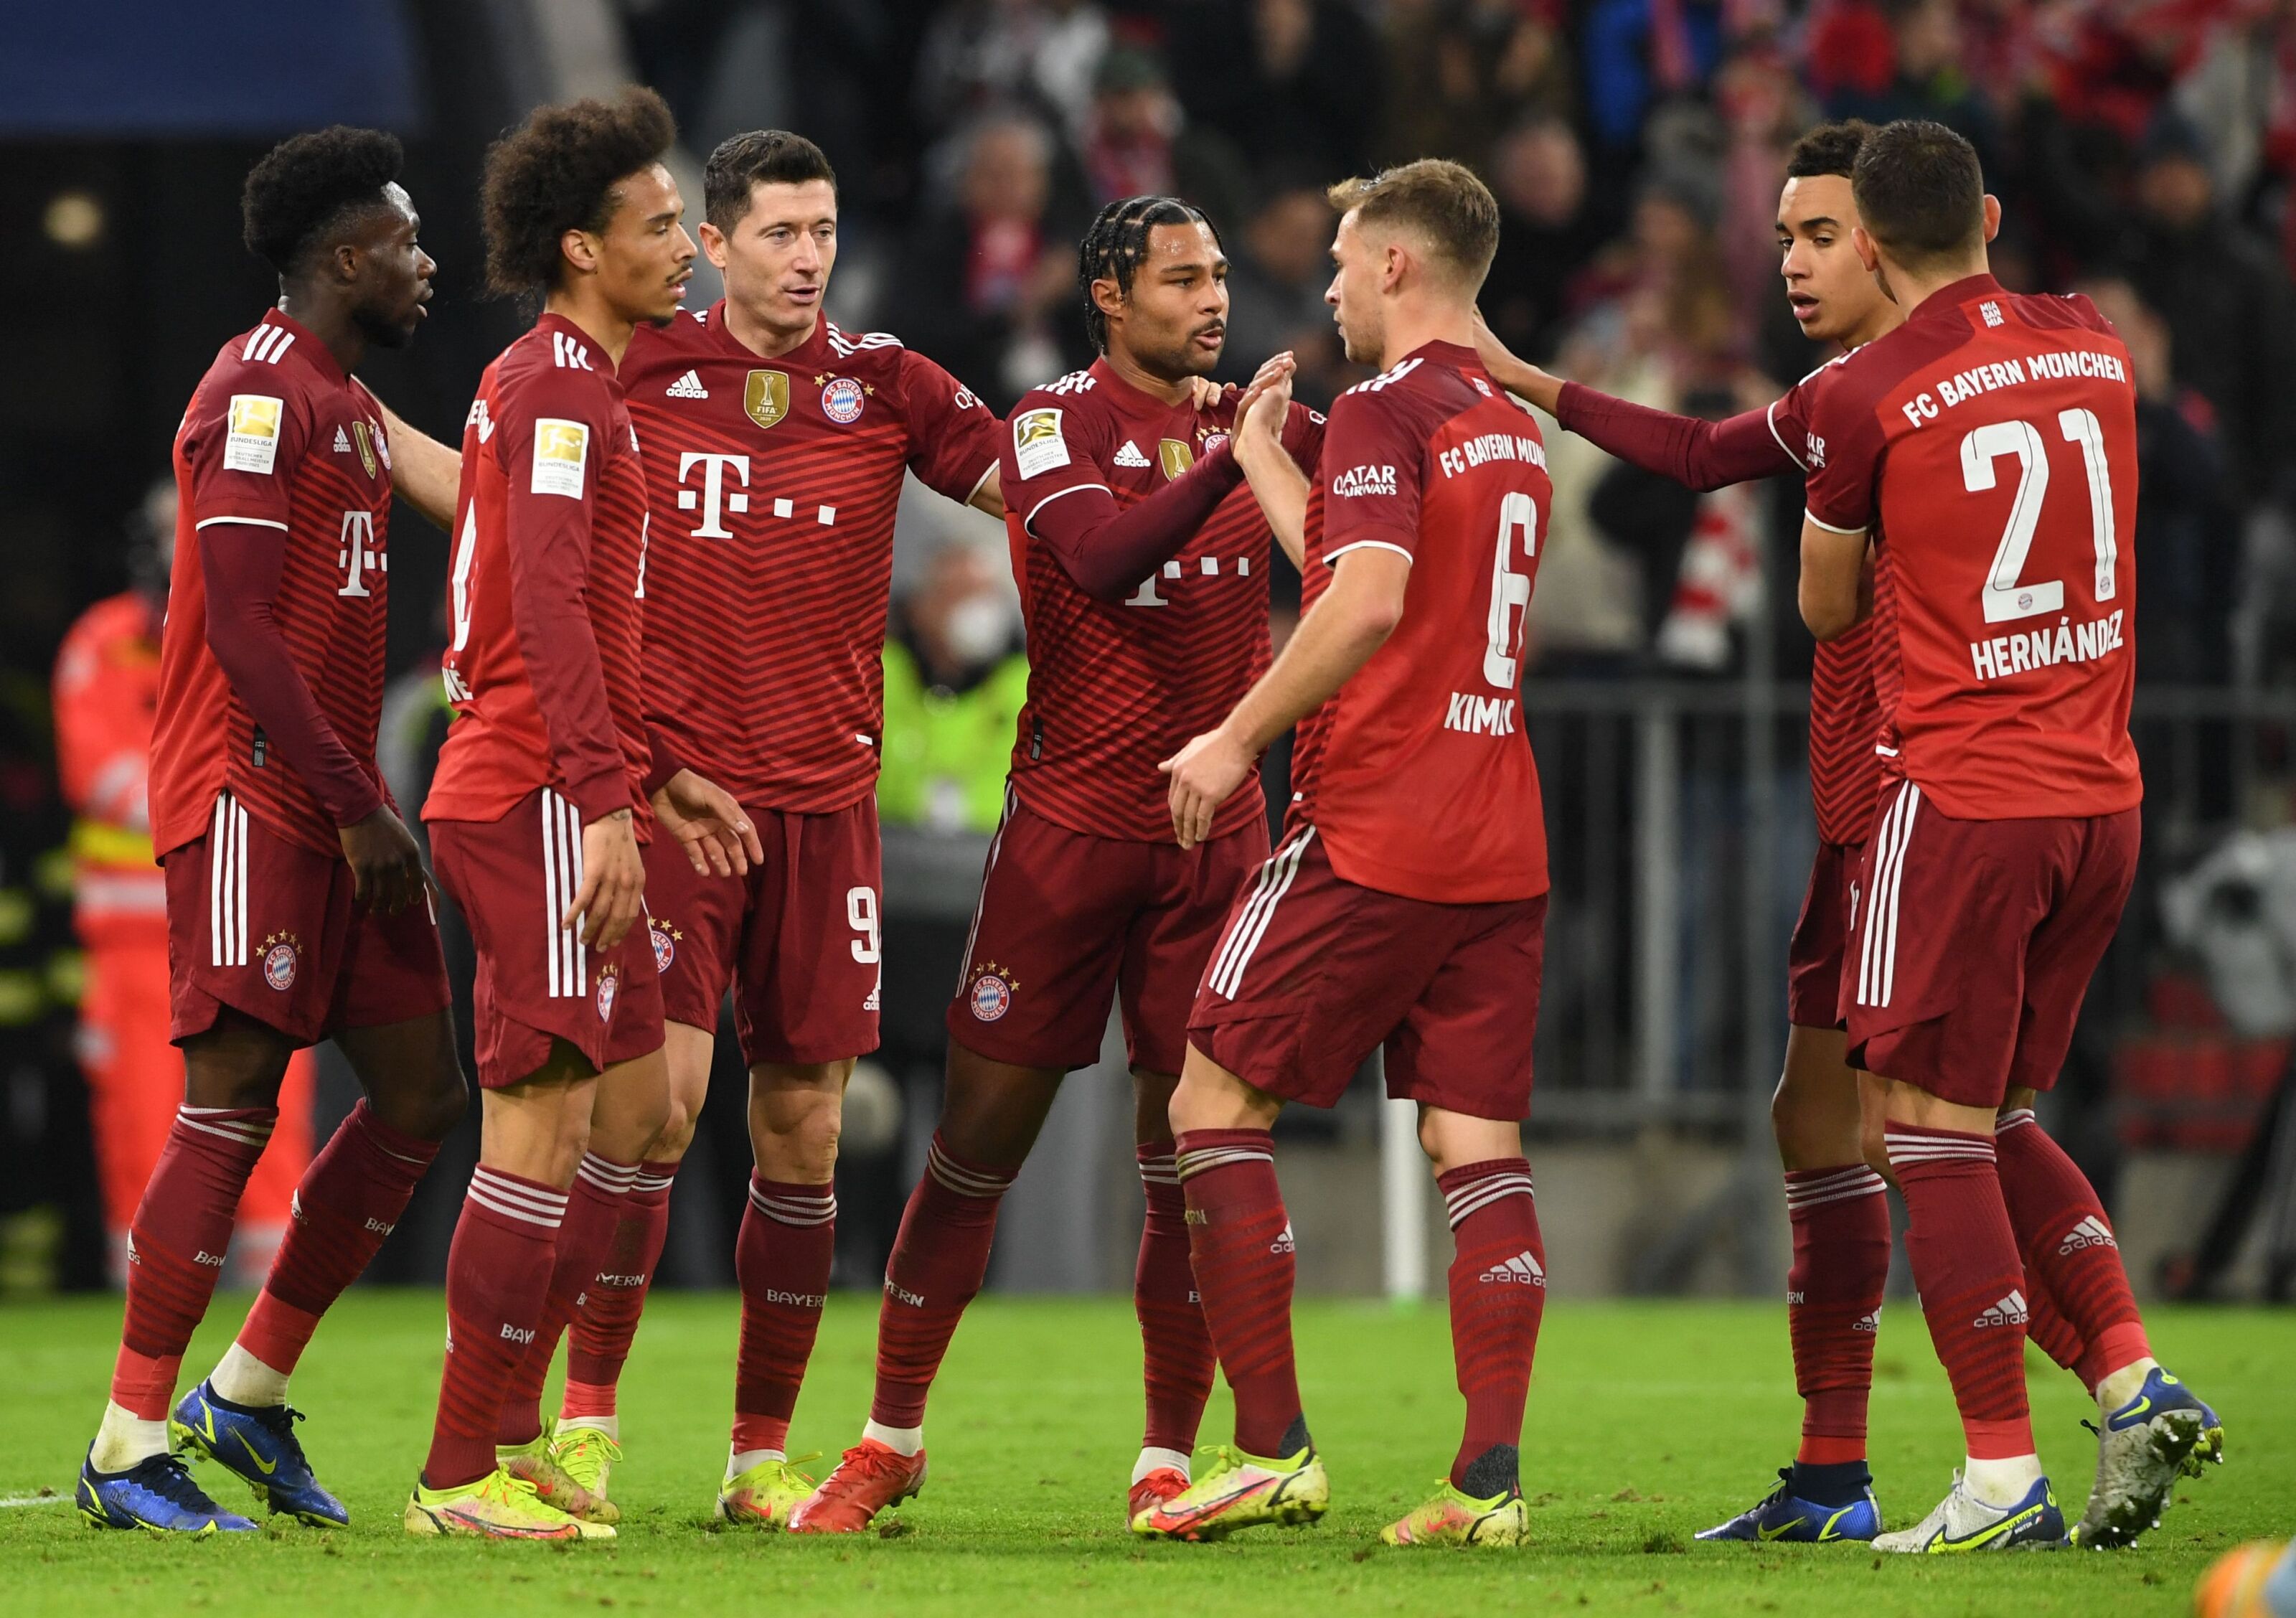 UEFA Champions League: Bayern Munich will win comfortably against RB Salzburg says Terry Phelan despite their shock defeat against VfL Bochum